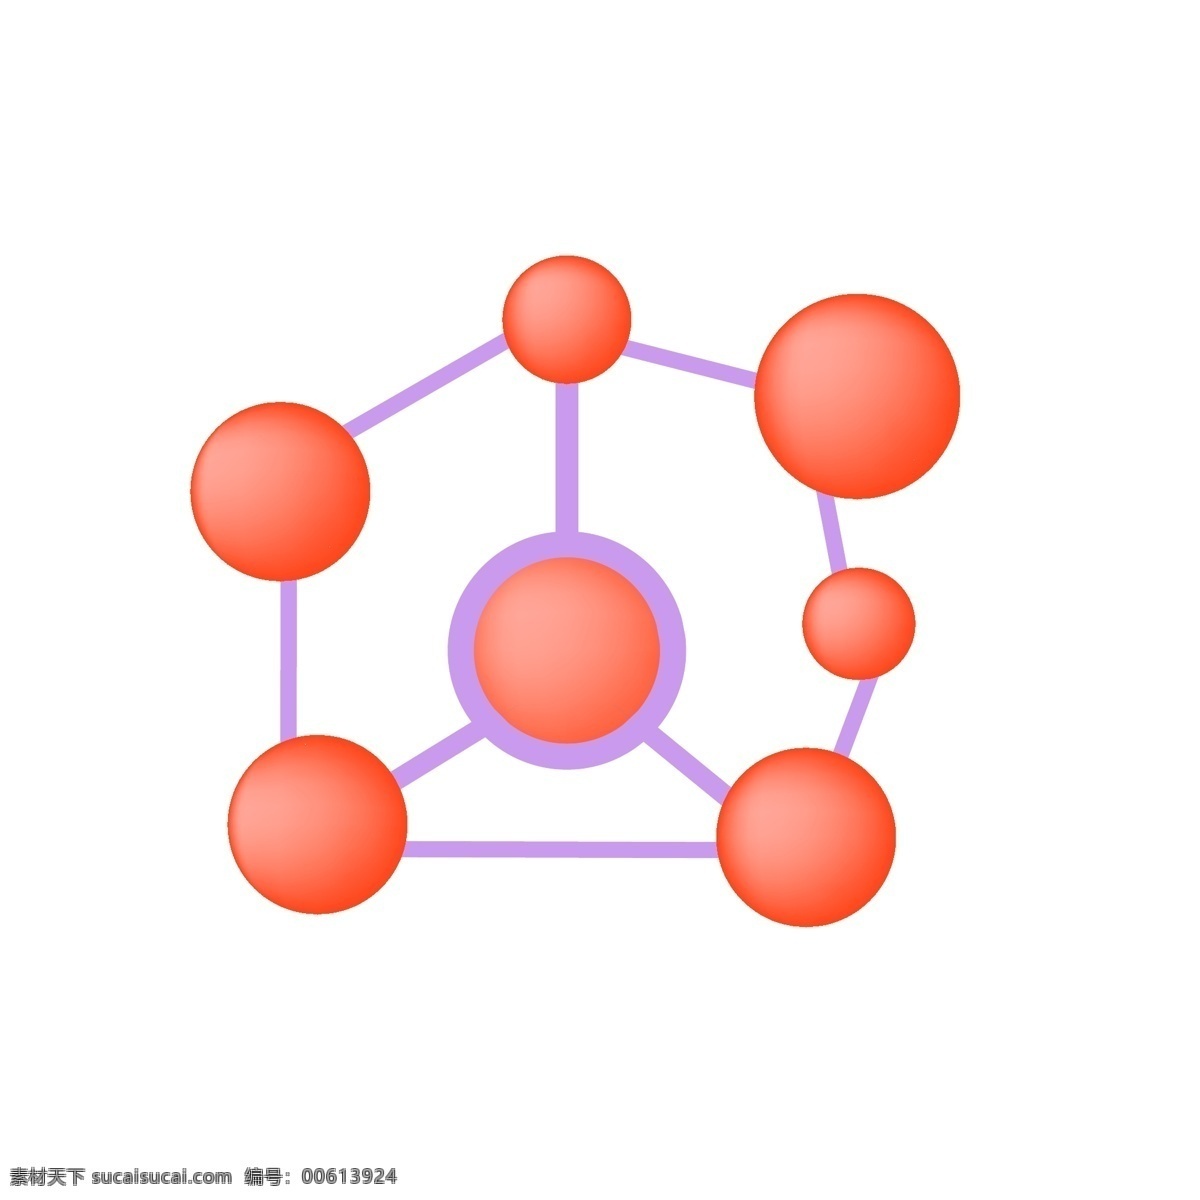 d 立体化 学分 子 结构图 化学教学 化学药品 分子结构图 化学 分子 分子式 结构图量杯 立体